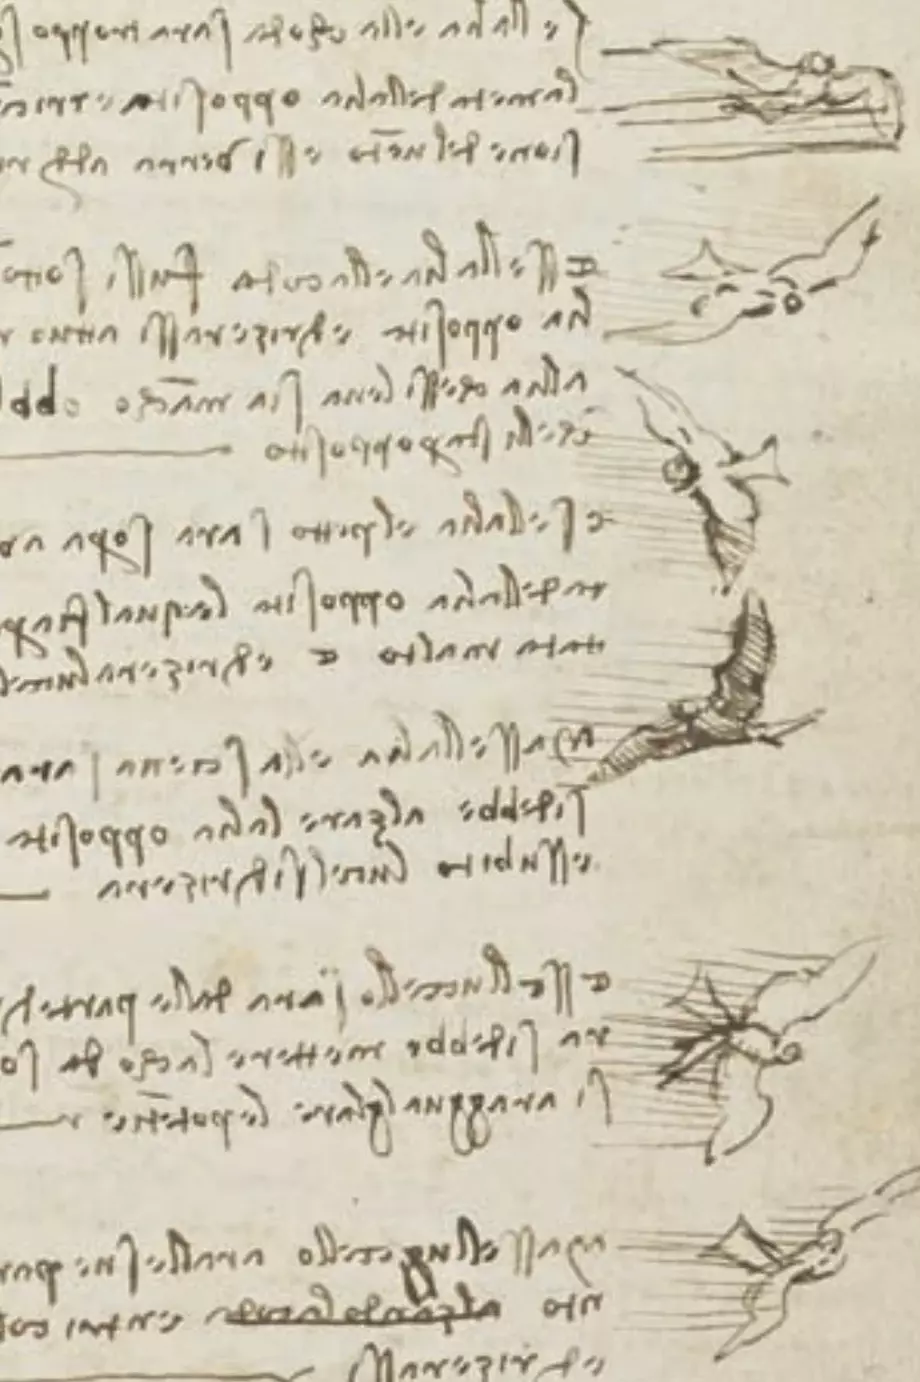 Leonardo da Vinci – Studien zum Flug der Vögel